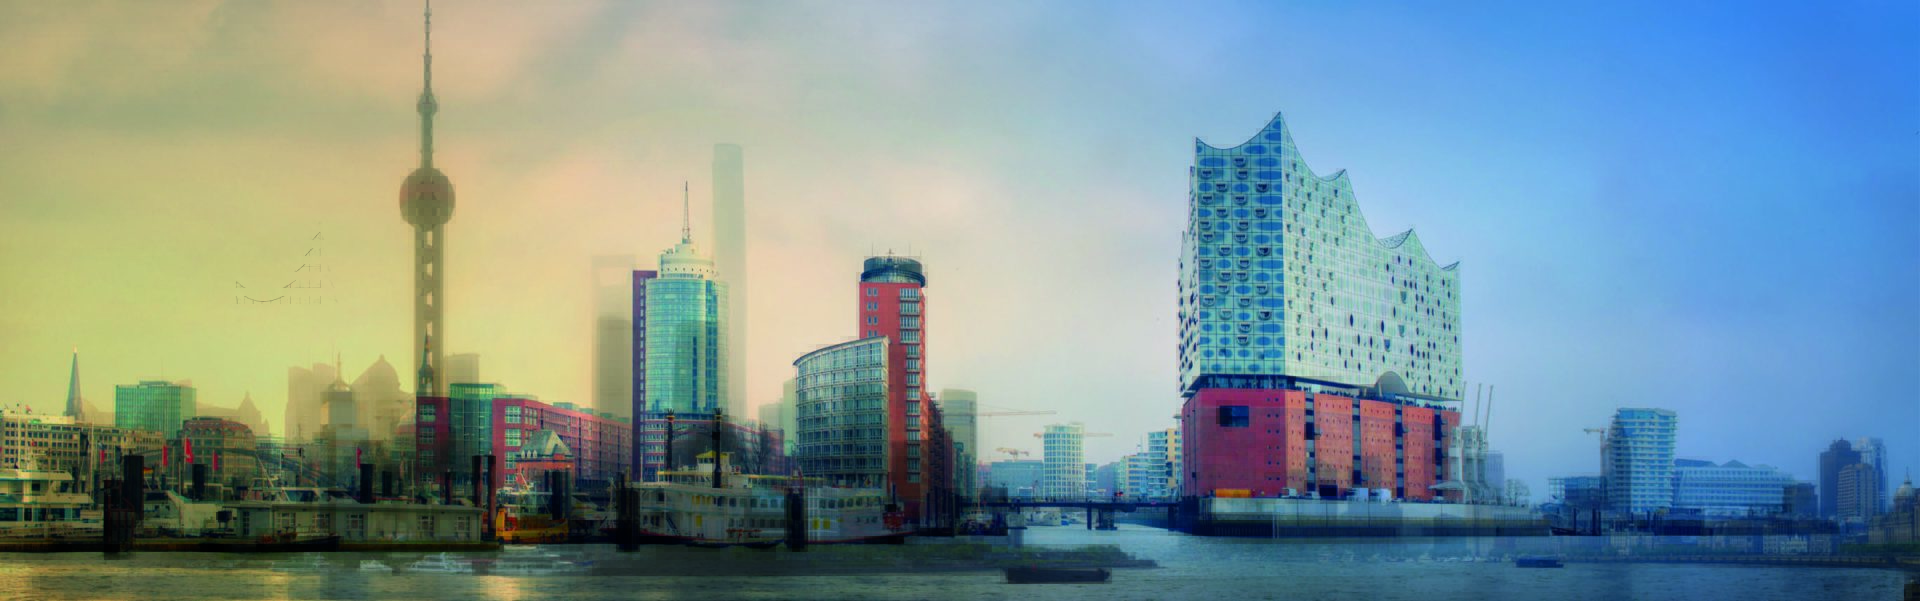 Shanghai Hamburg SNB LEAF - Law firms specialized in M&A